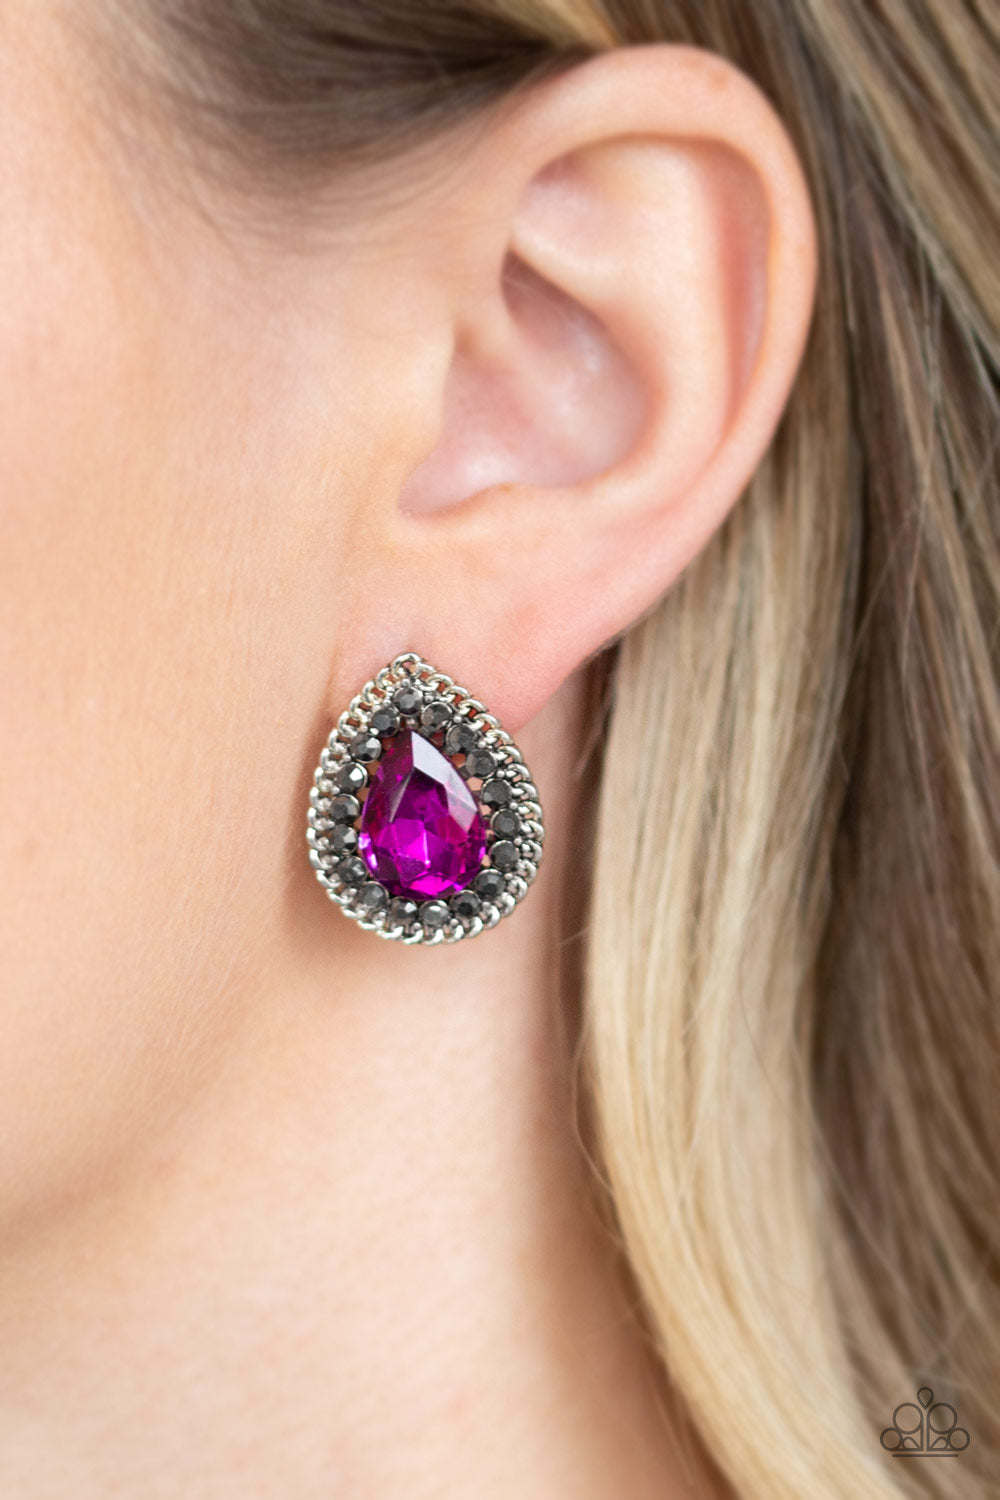 Paparazzi Accessories Debutante Debut - Pink Earrings 